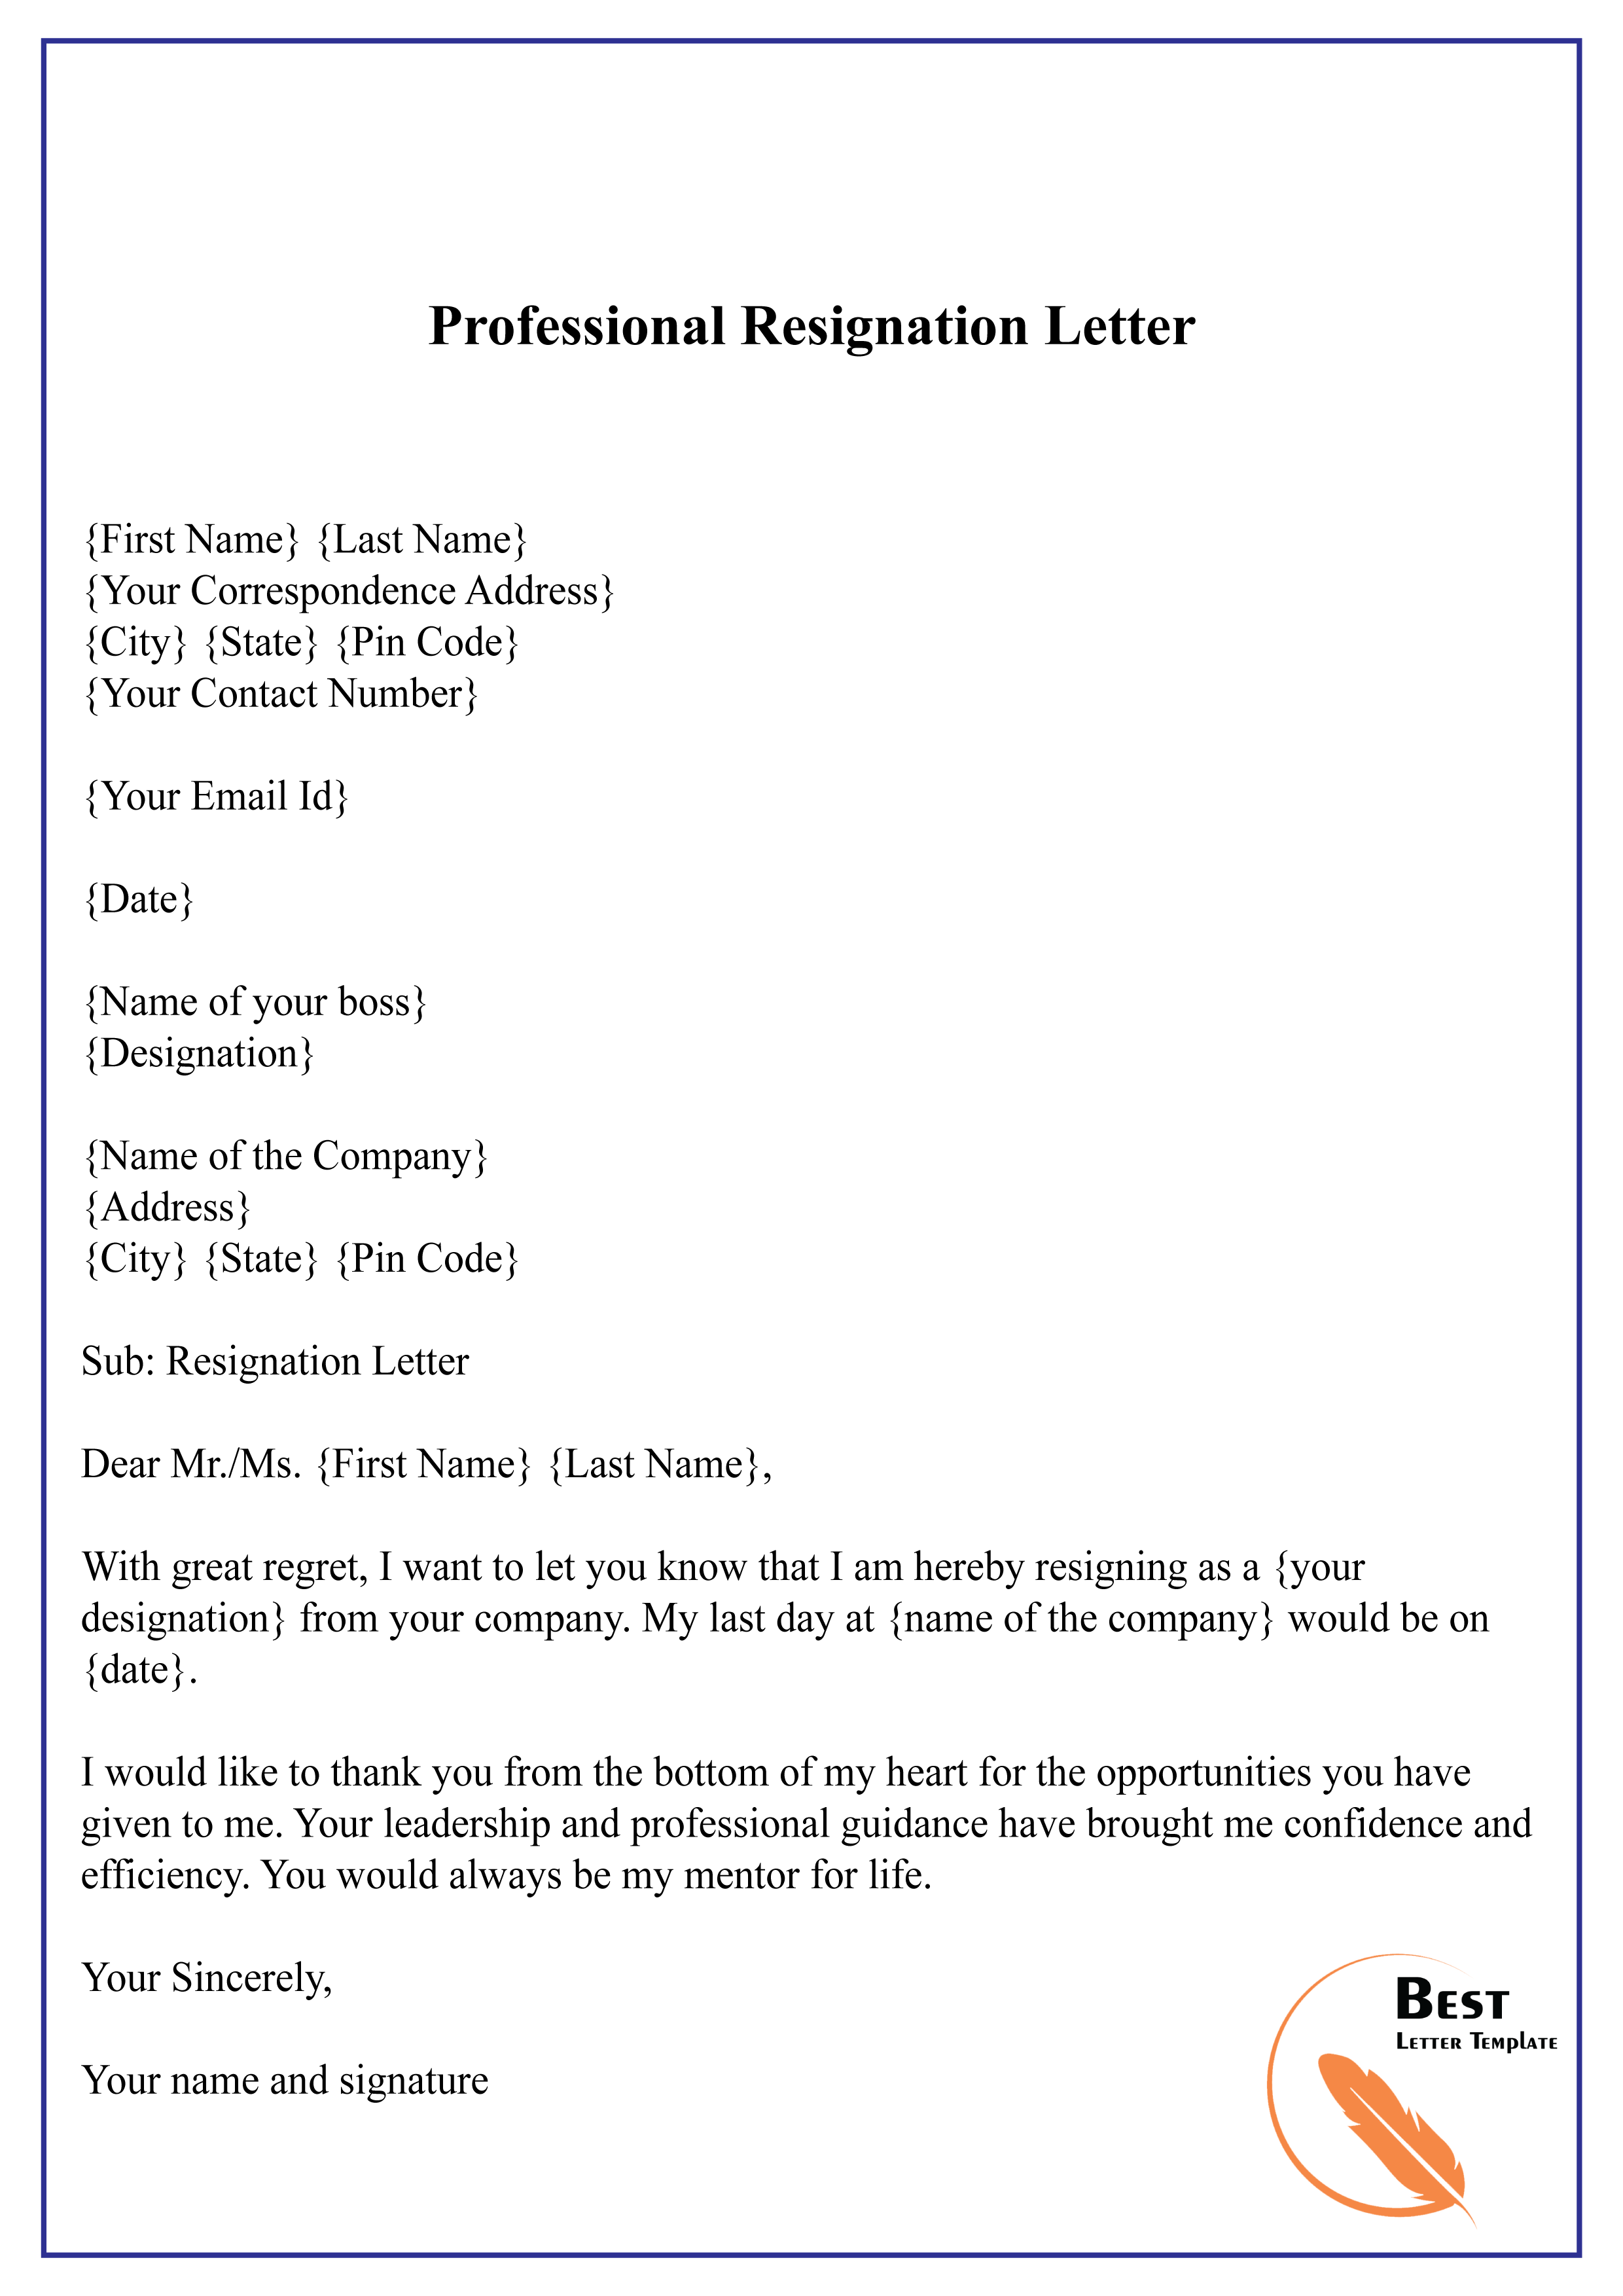 professional-resignation-letter-01-best-letter-template